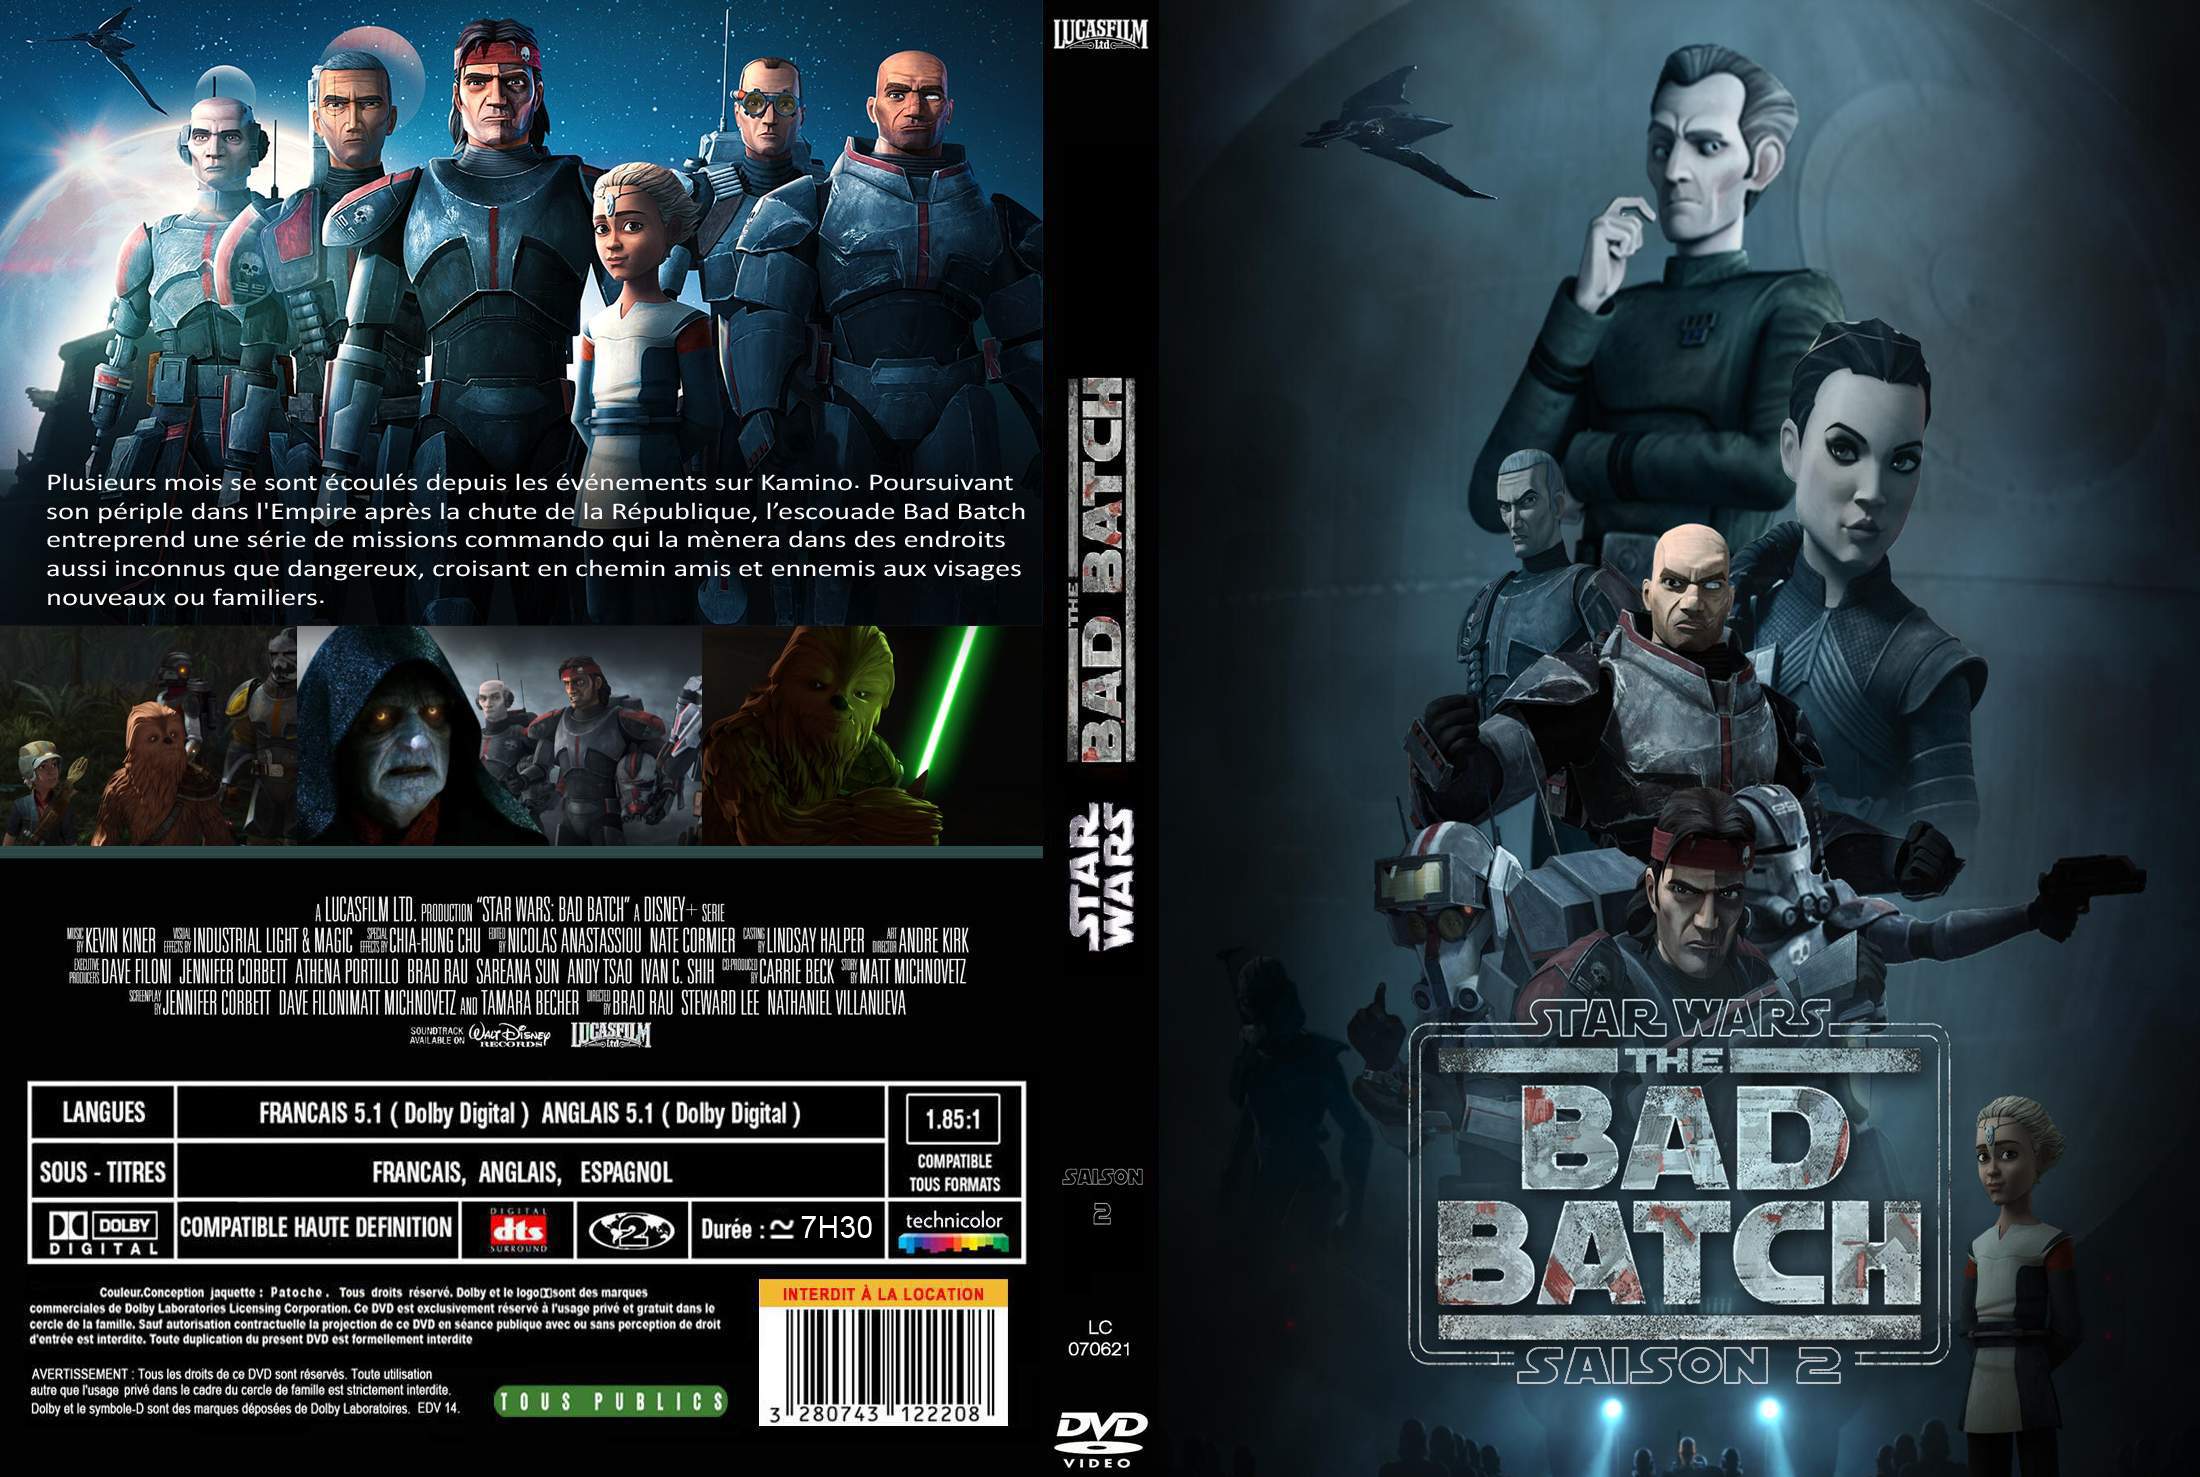 Jaquette DVD Star Wars Bad Batch saison 2 custom